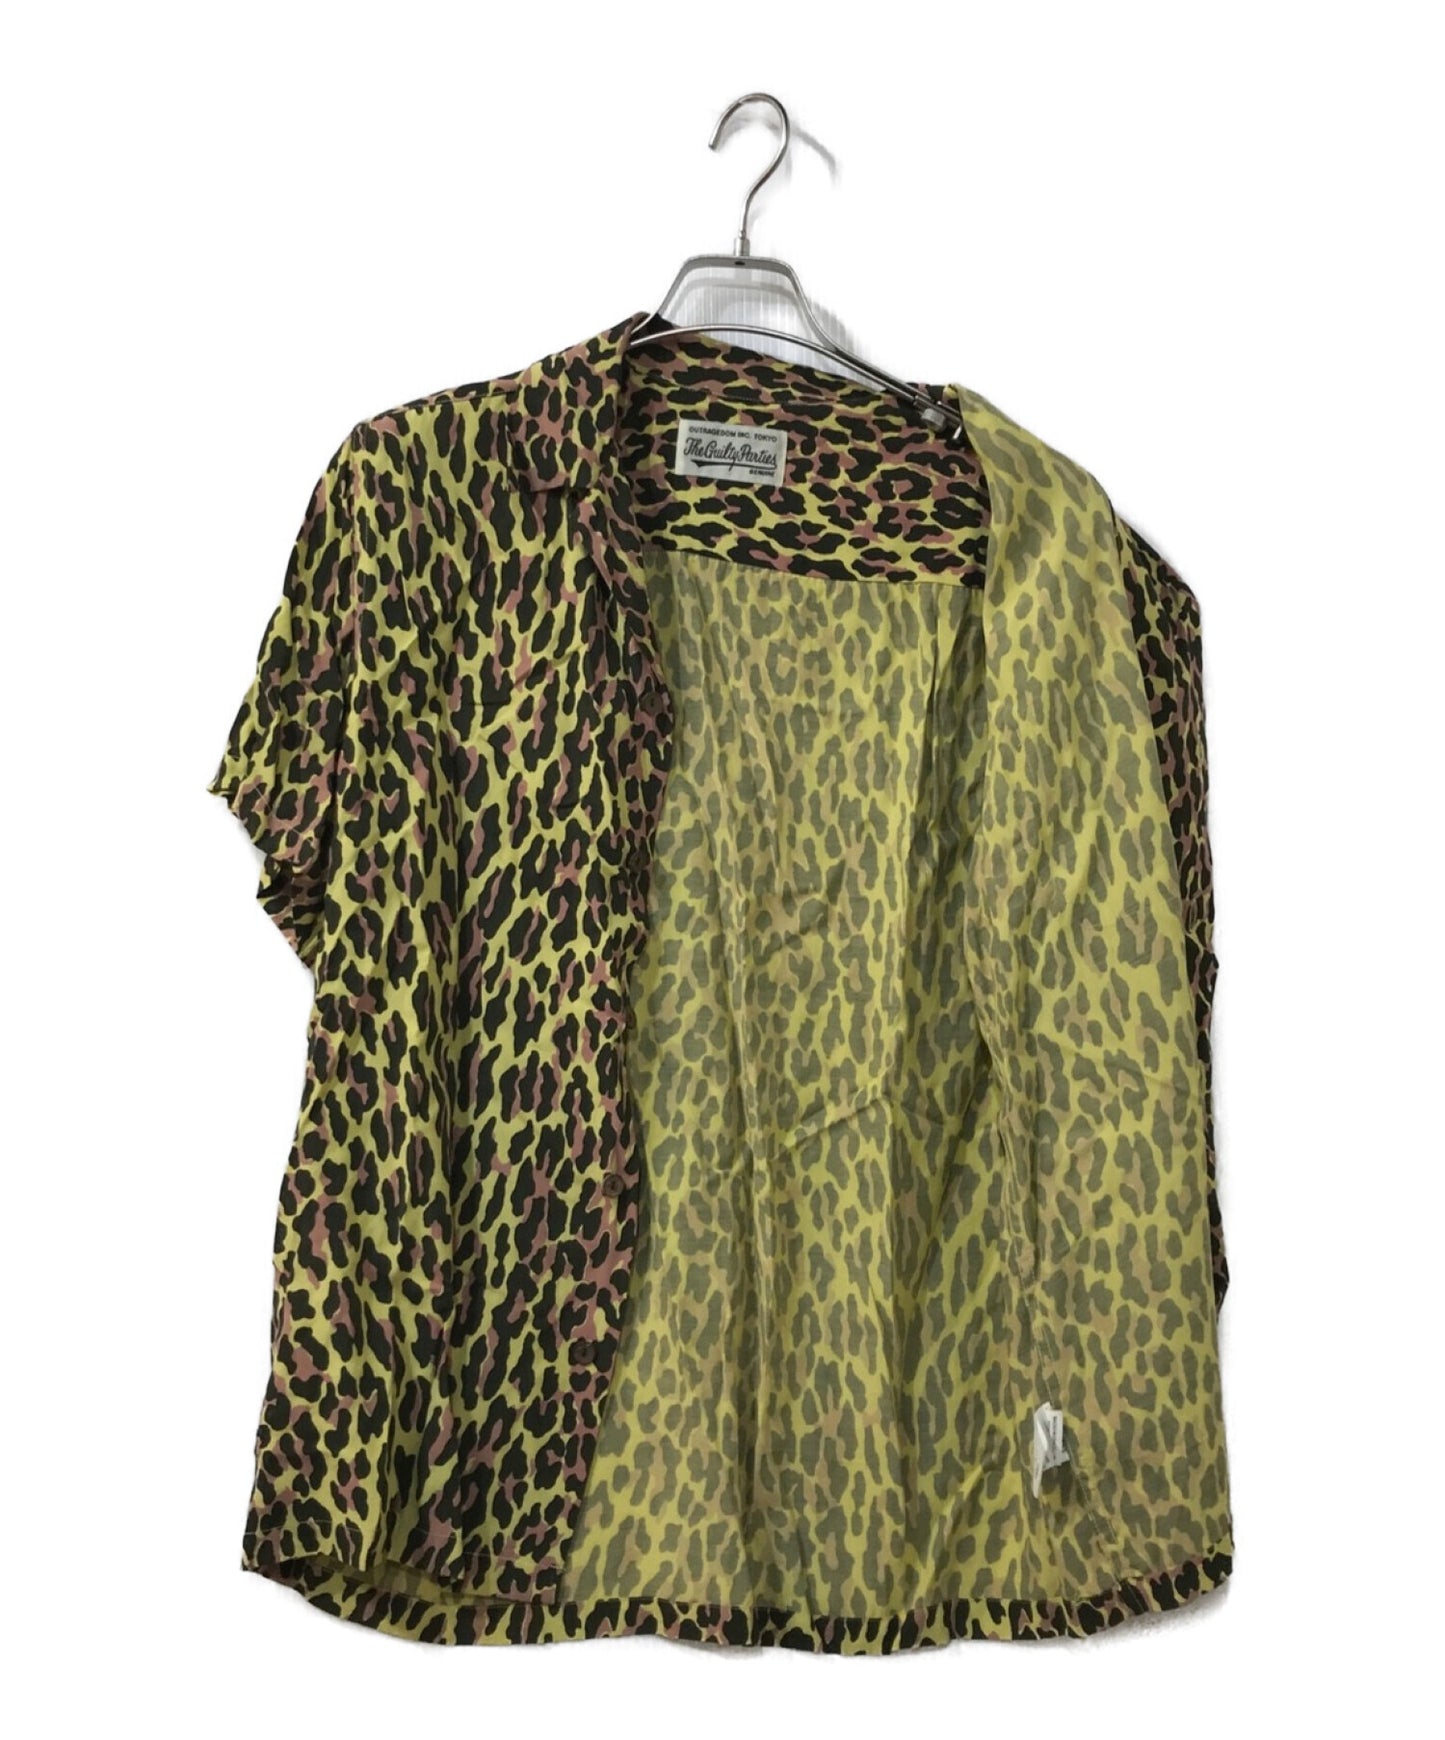 Wacko Maria Leopard印刷riar open Collar衬衫